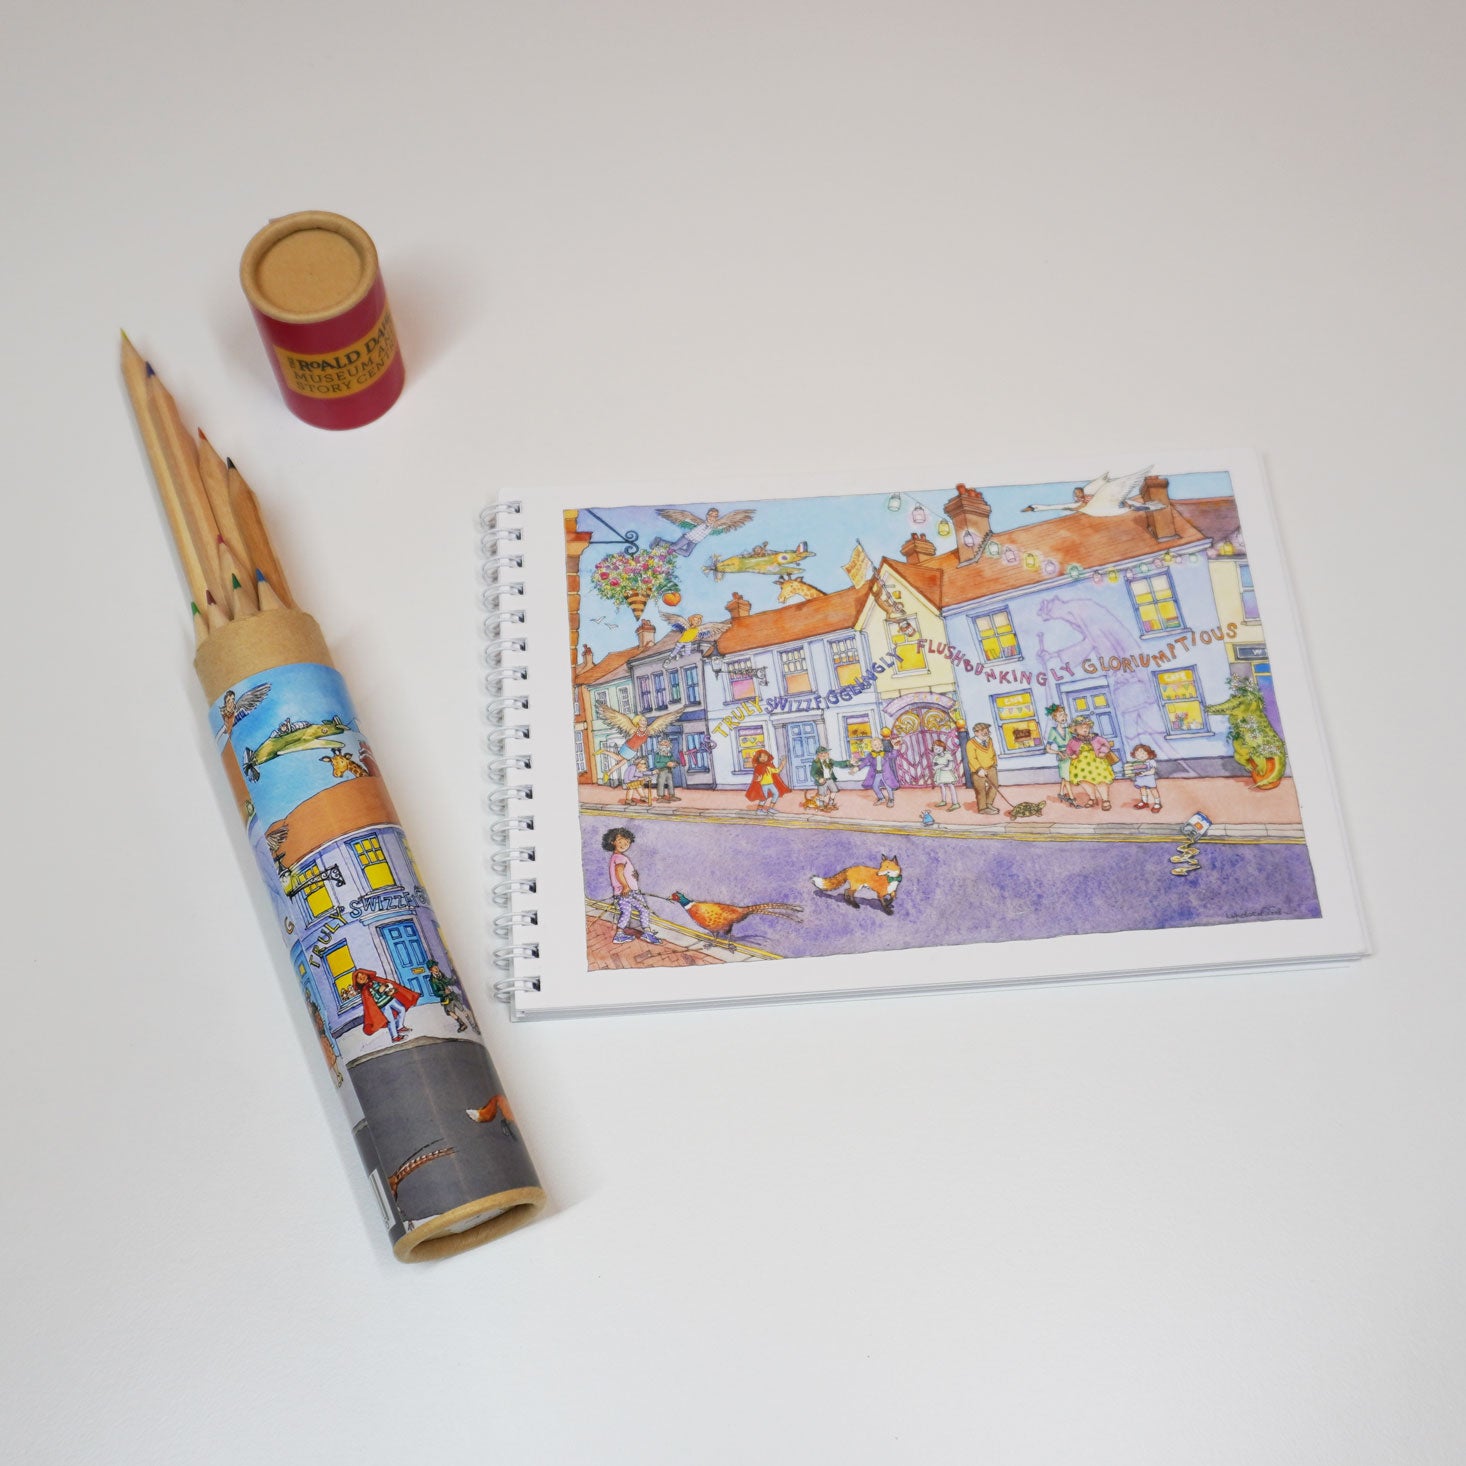 Roald Dahl Museum notepad with colouring pencils set